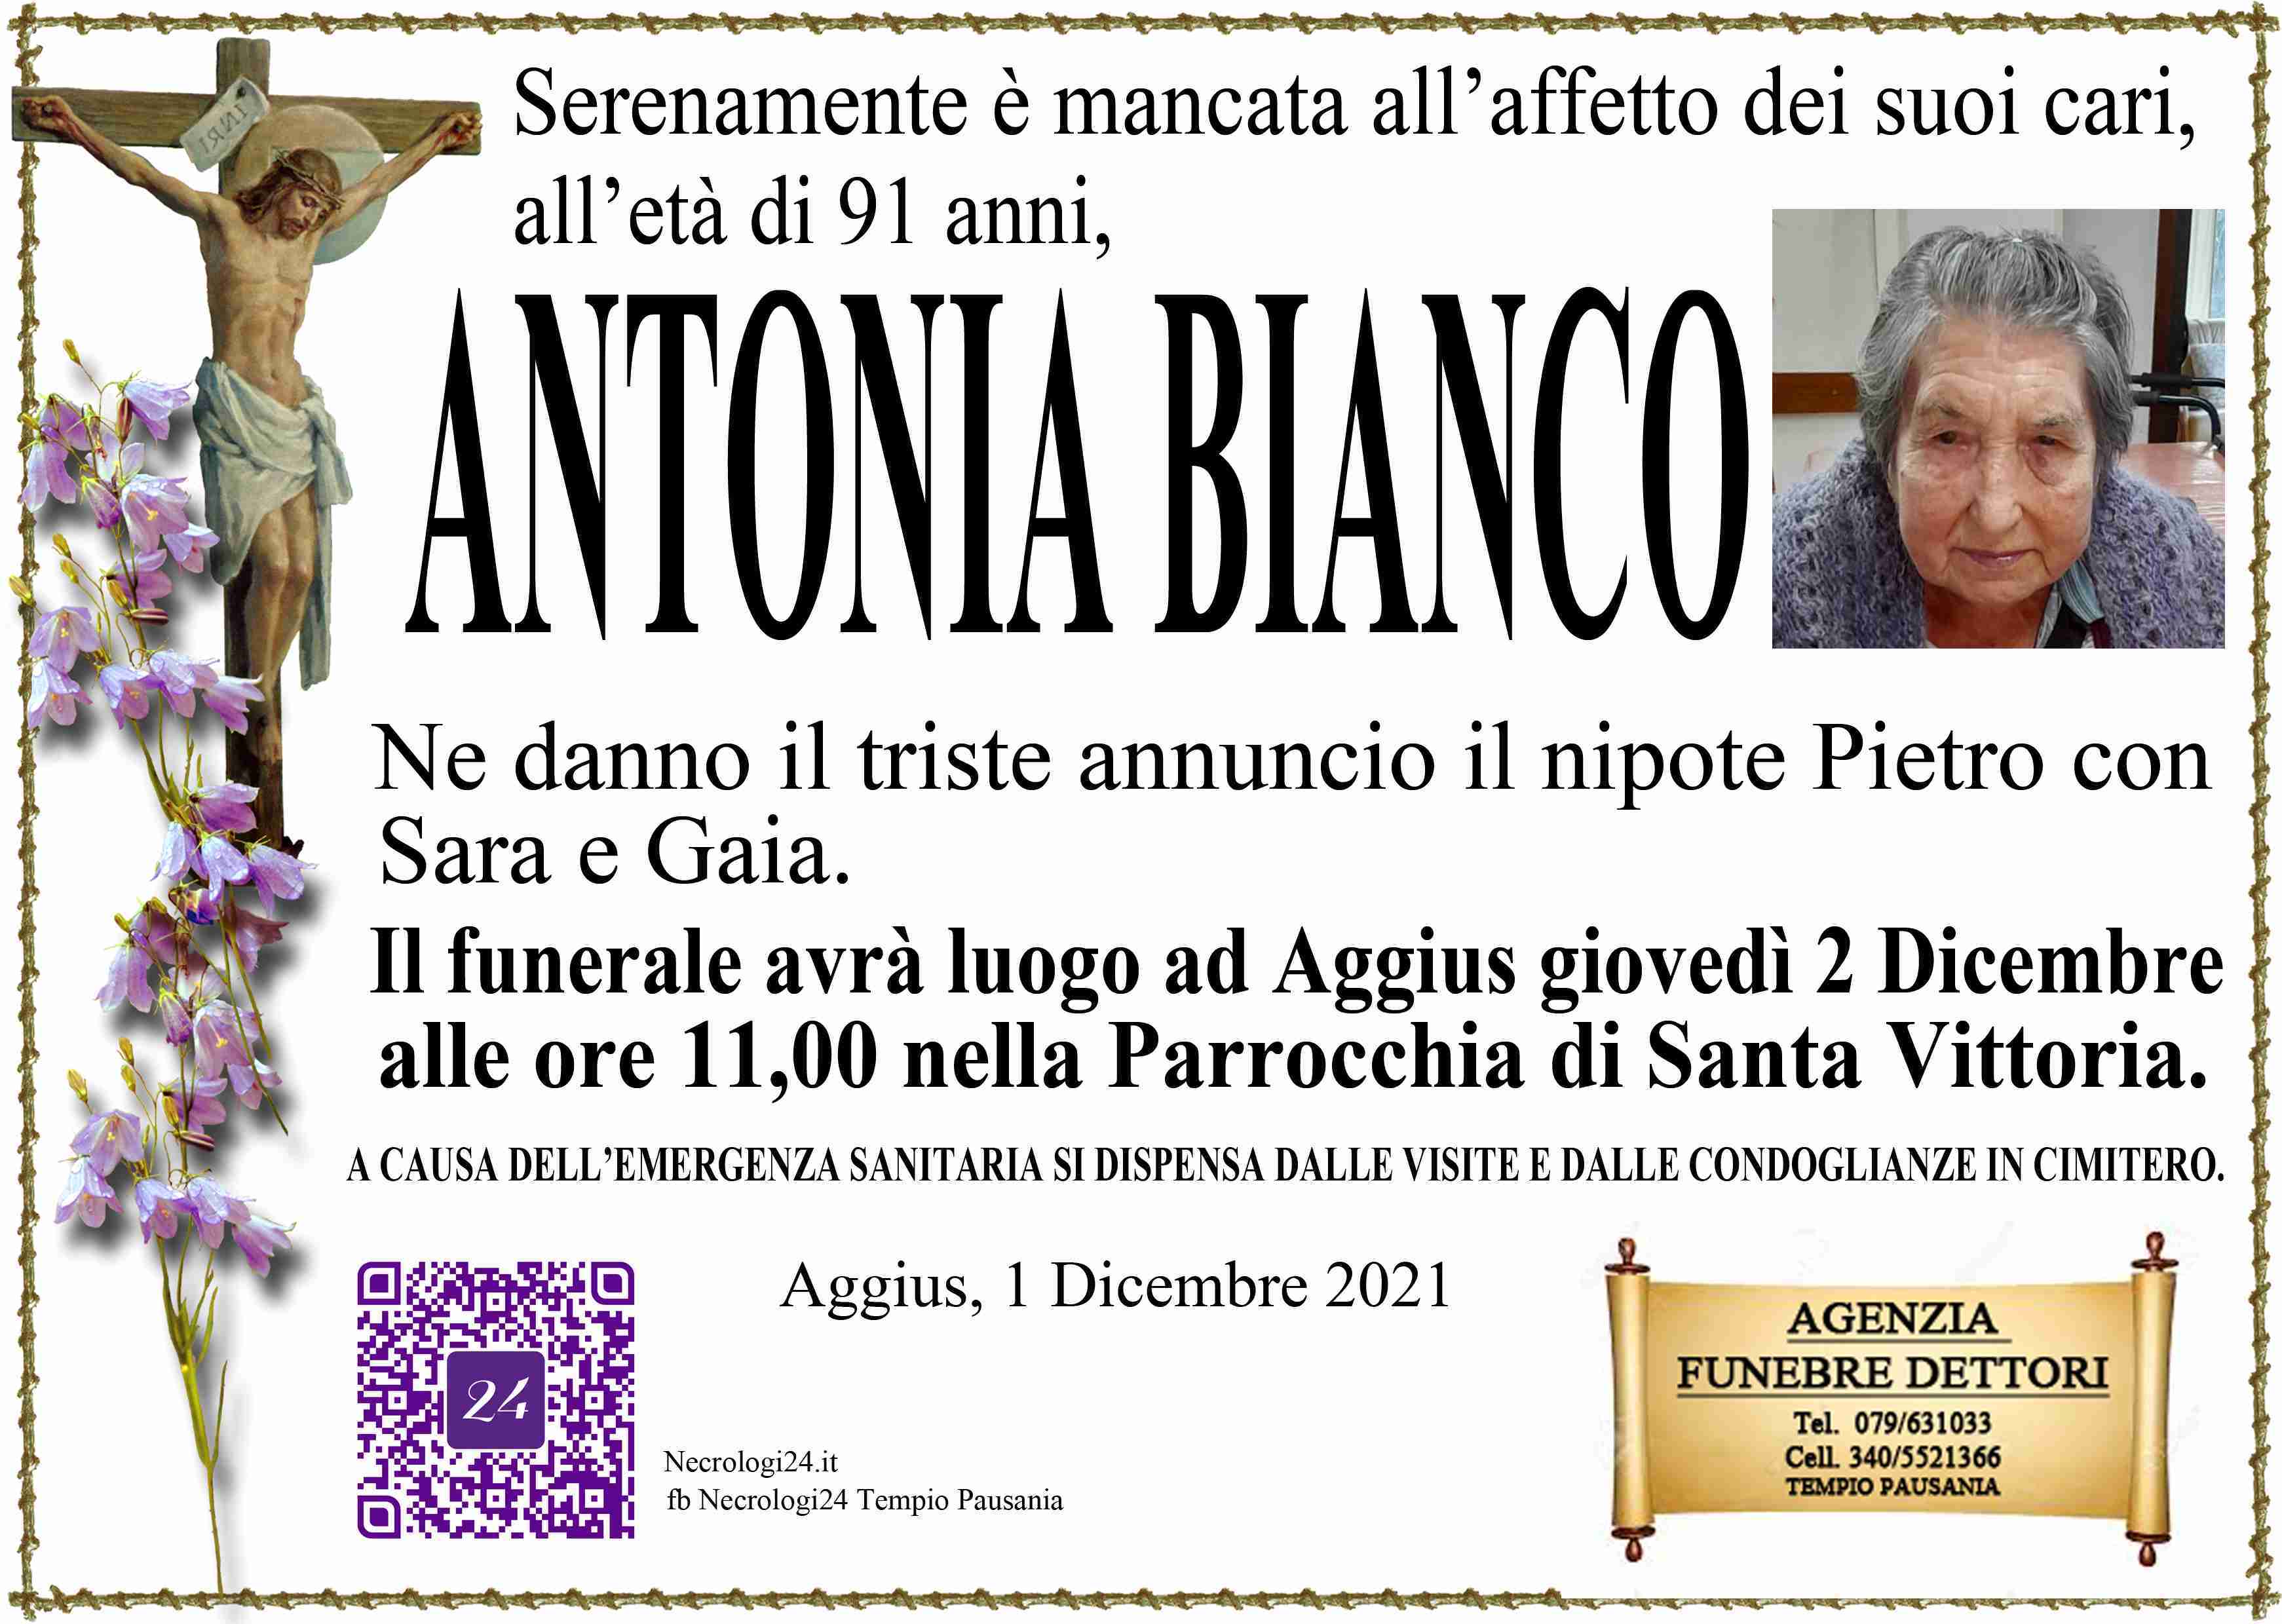 Antonia Bianco